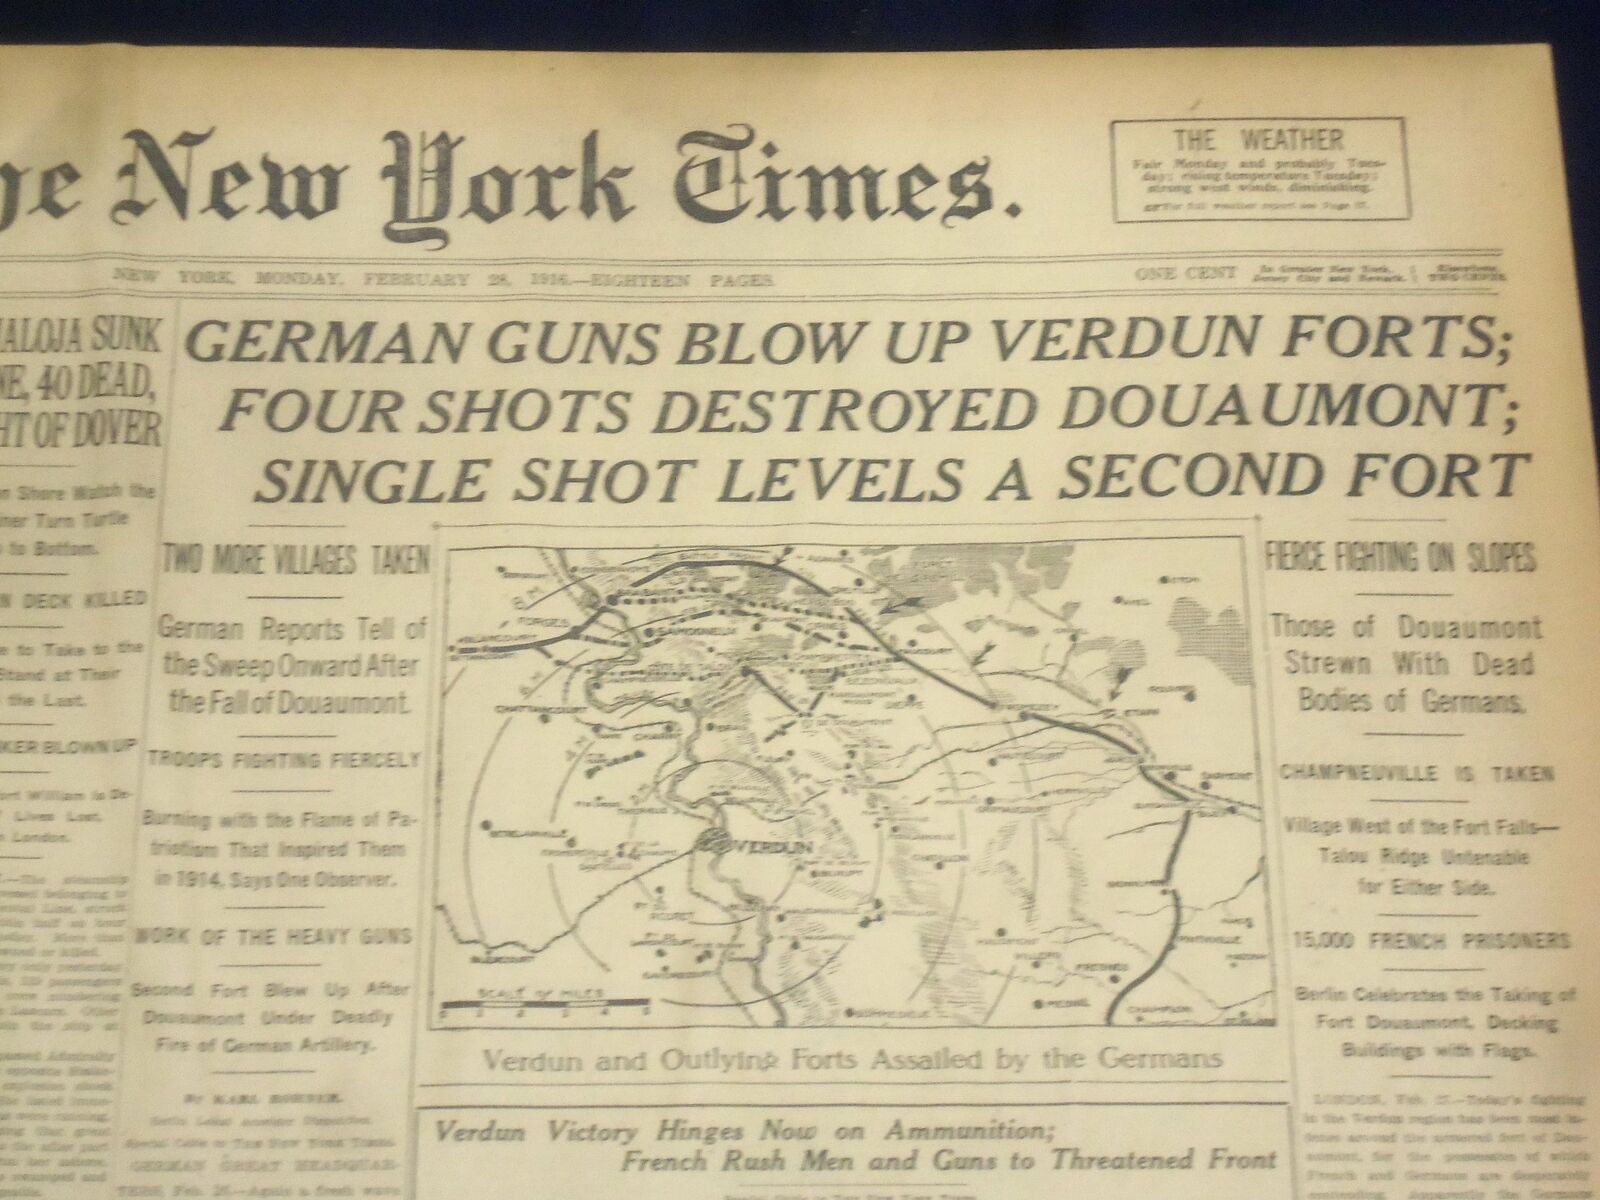 1916 FEBRUARY 28 NEW YORK TIMES - GERMAN GUNS BLOW UP VERDUN FORTS - NT 9040